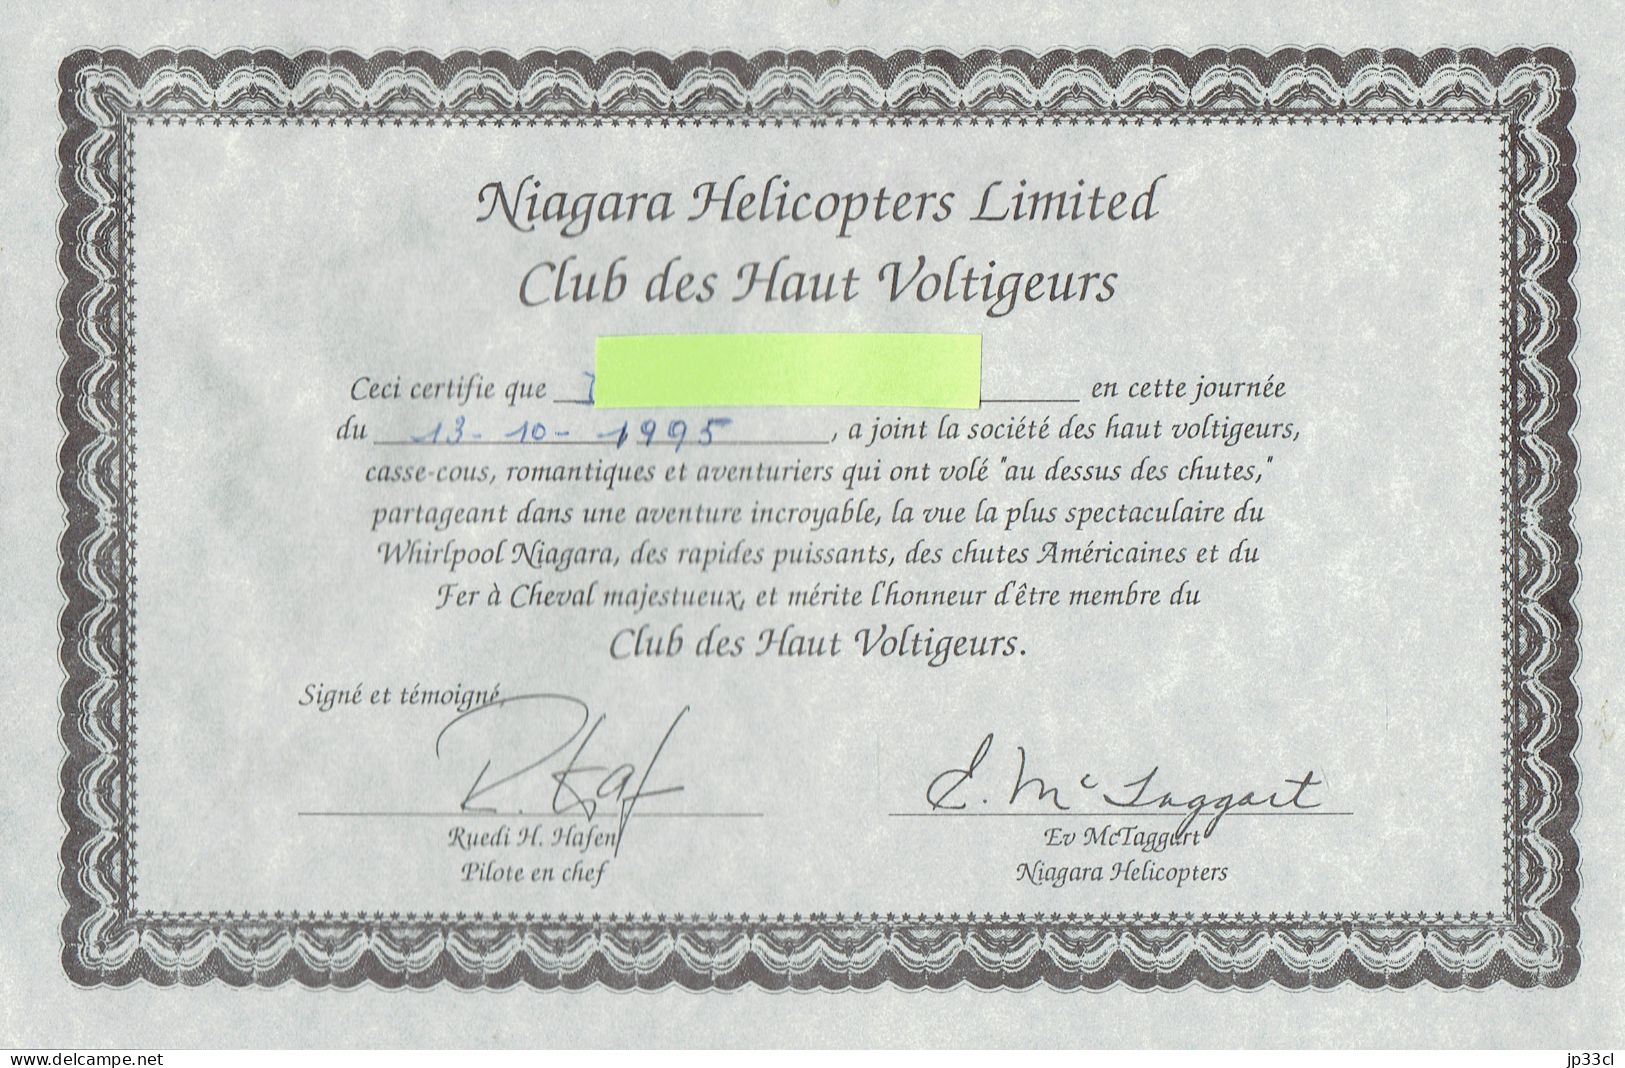 Les Chutes Du Niagara Vues D'hélicoptère (helicopter) Ticket D'embarquement + 9 Photos Prises à Bord + Diplôme (1995) - America